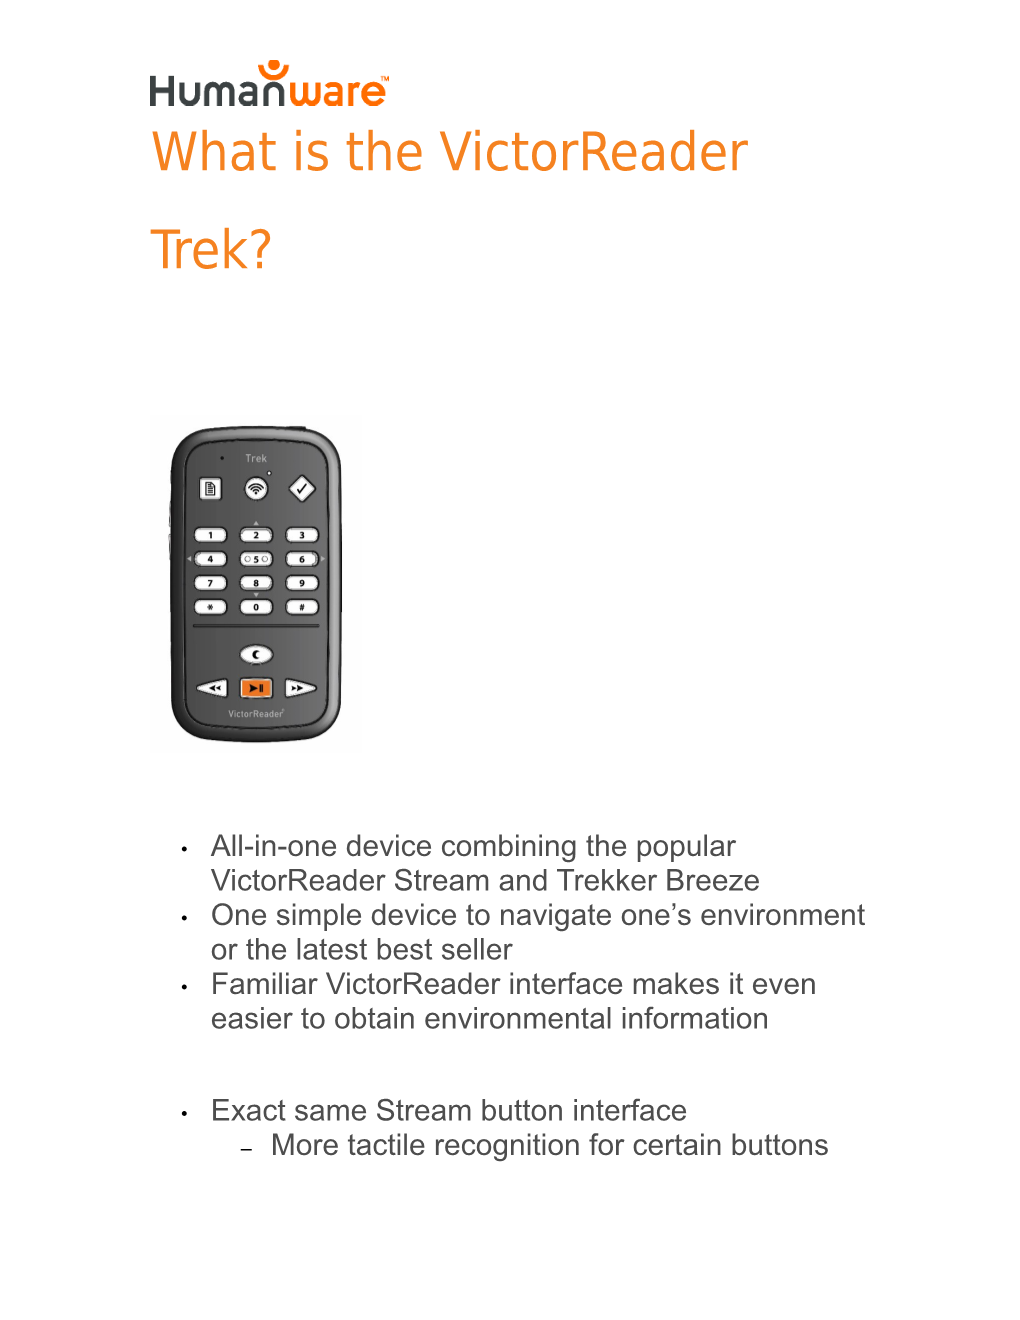 What Is the Victorreader Trek?